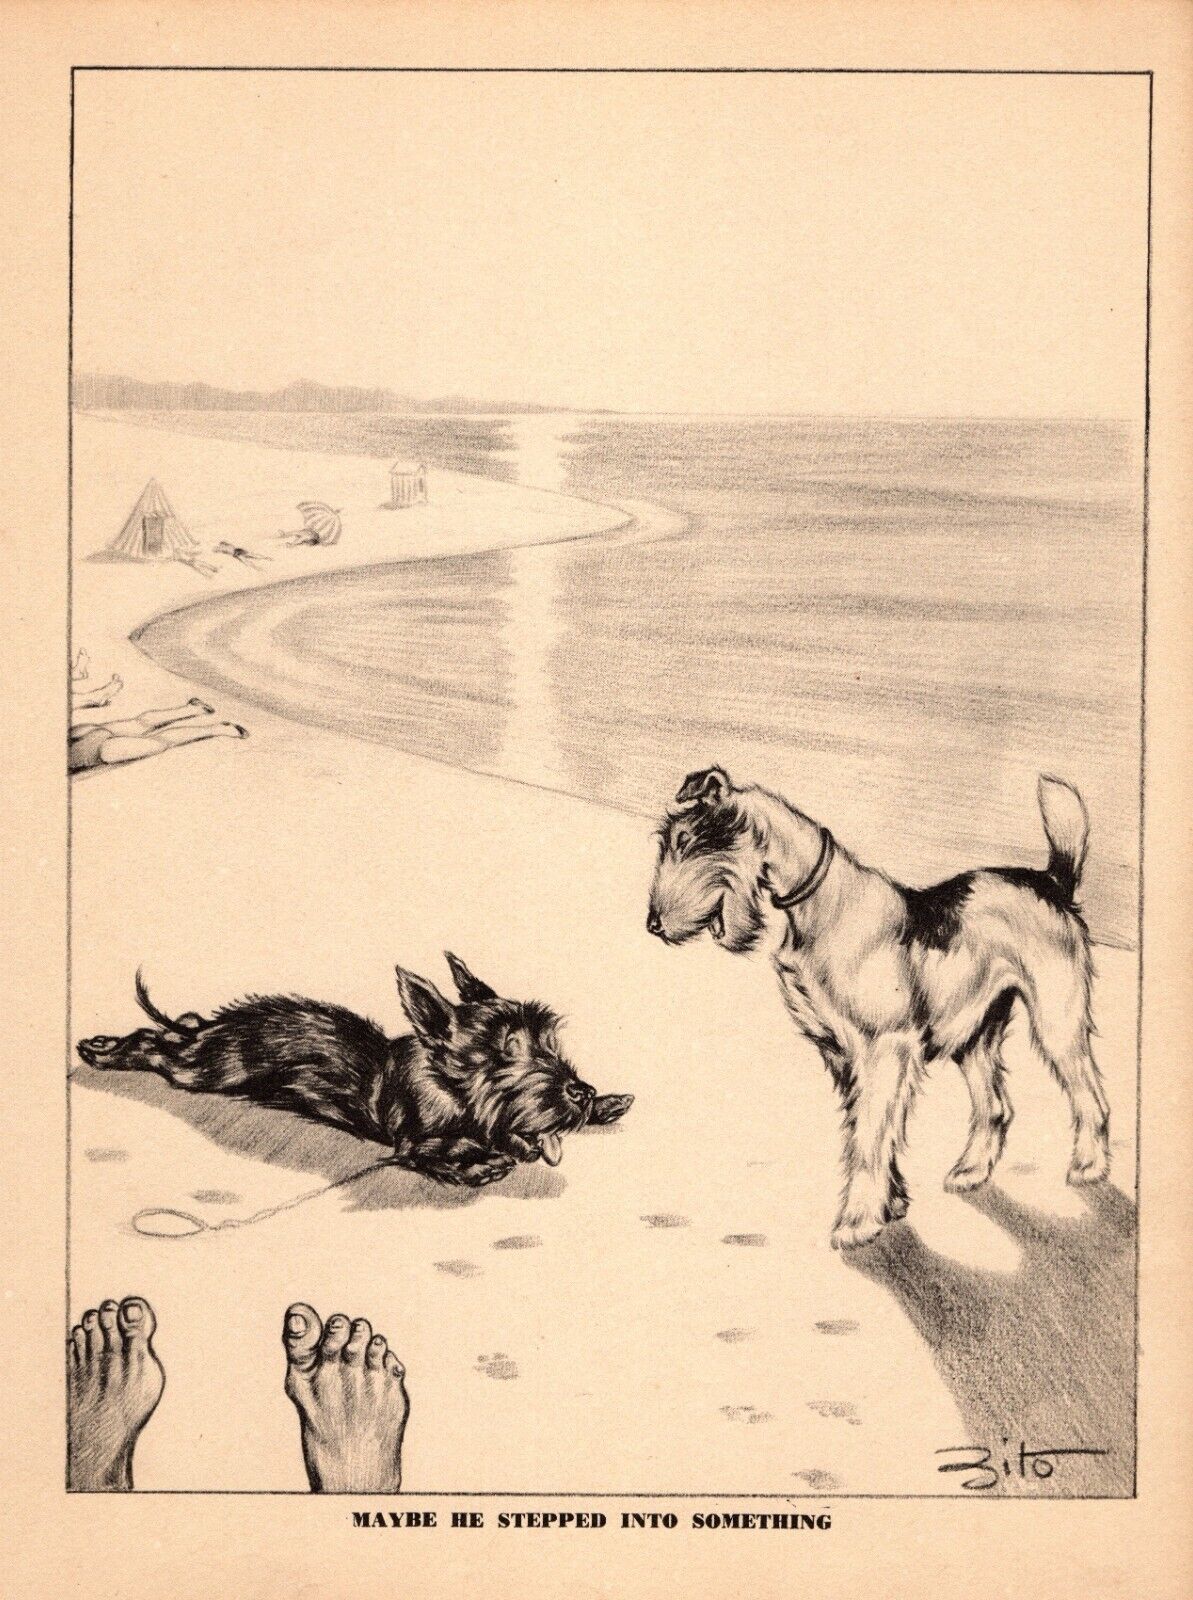 Funny Fox Terrier Print 1940s Humorous Scottish Terrier Print Art by Zito 5259e